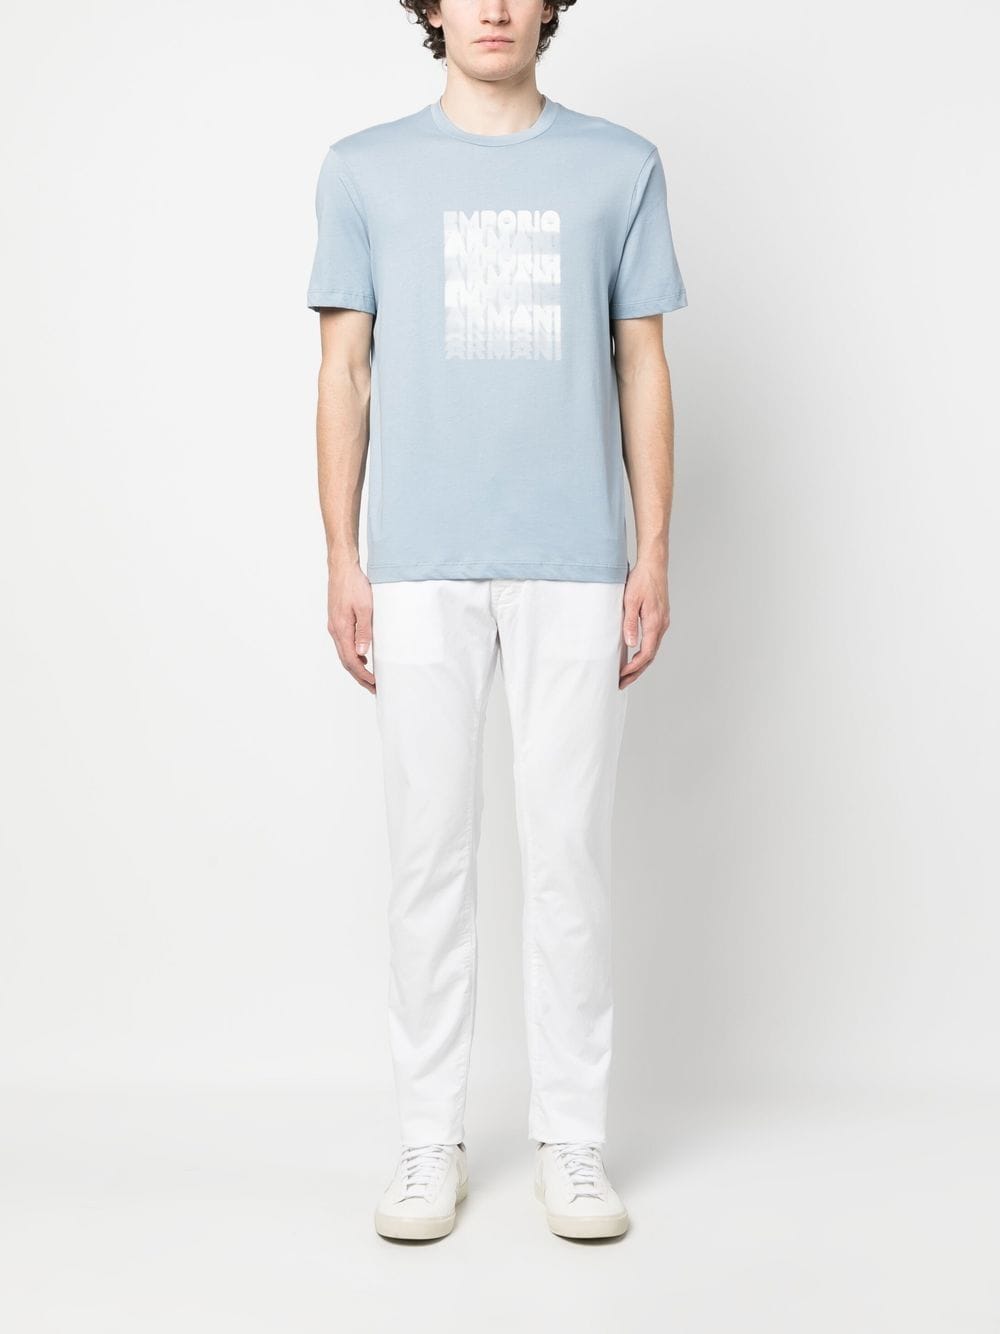 Emporio Armani T-shirt met print - Blauw